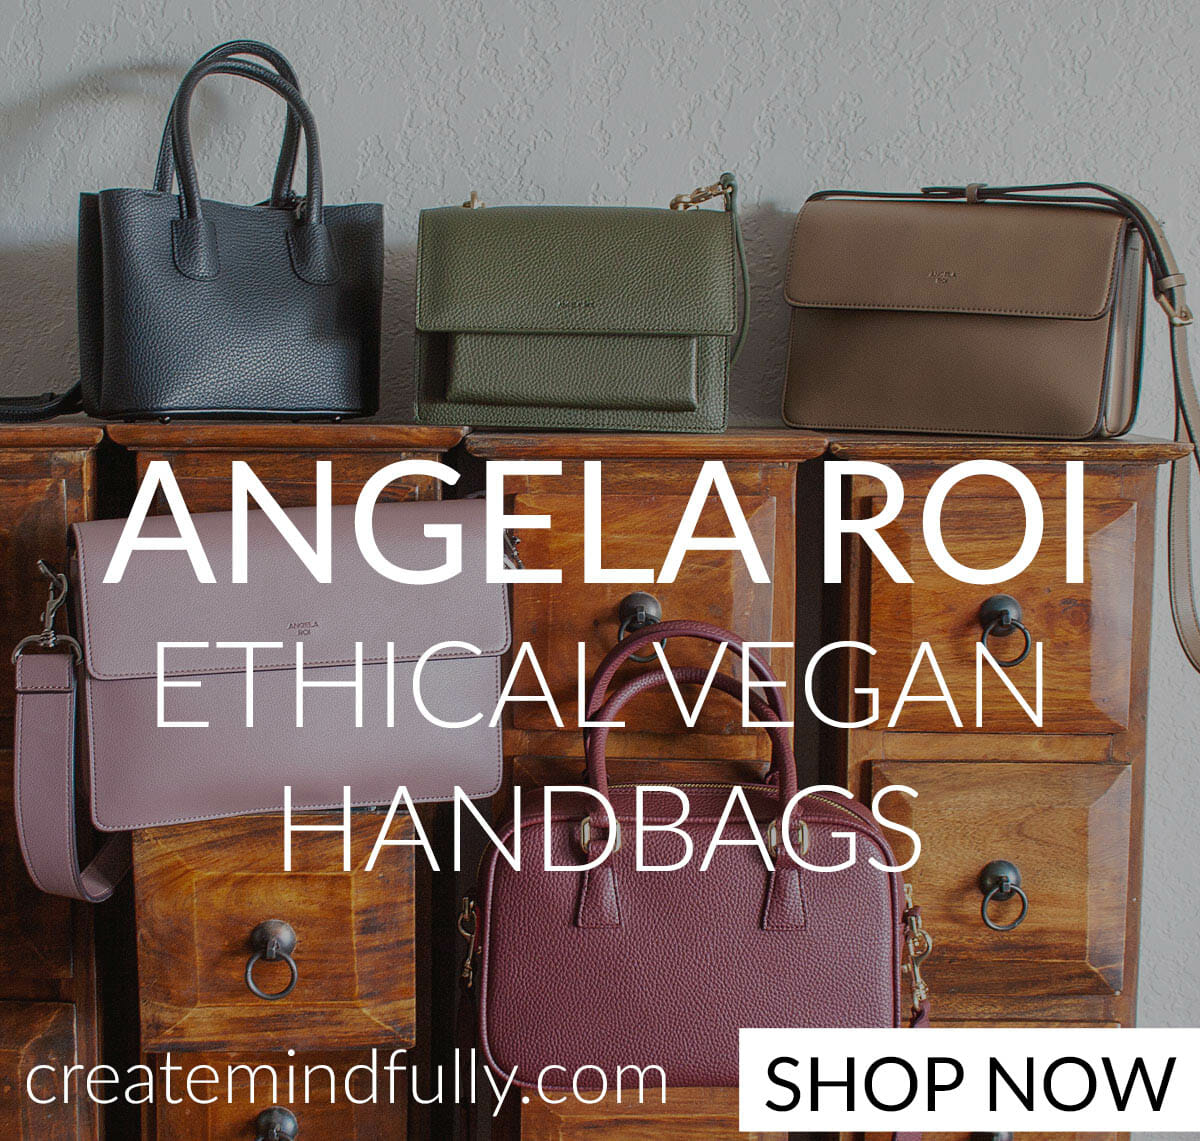 "Angela Roi ethical vegan handbags" written on photo of 5 purses